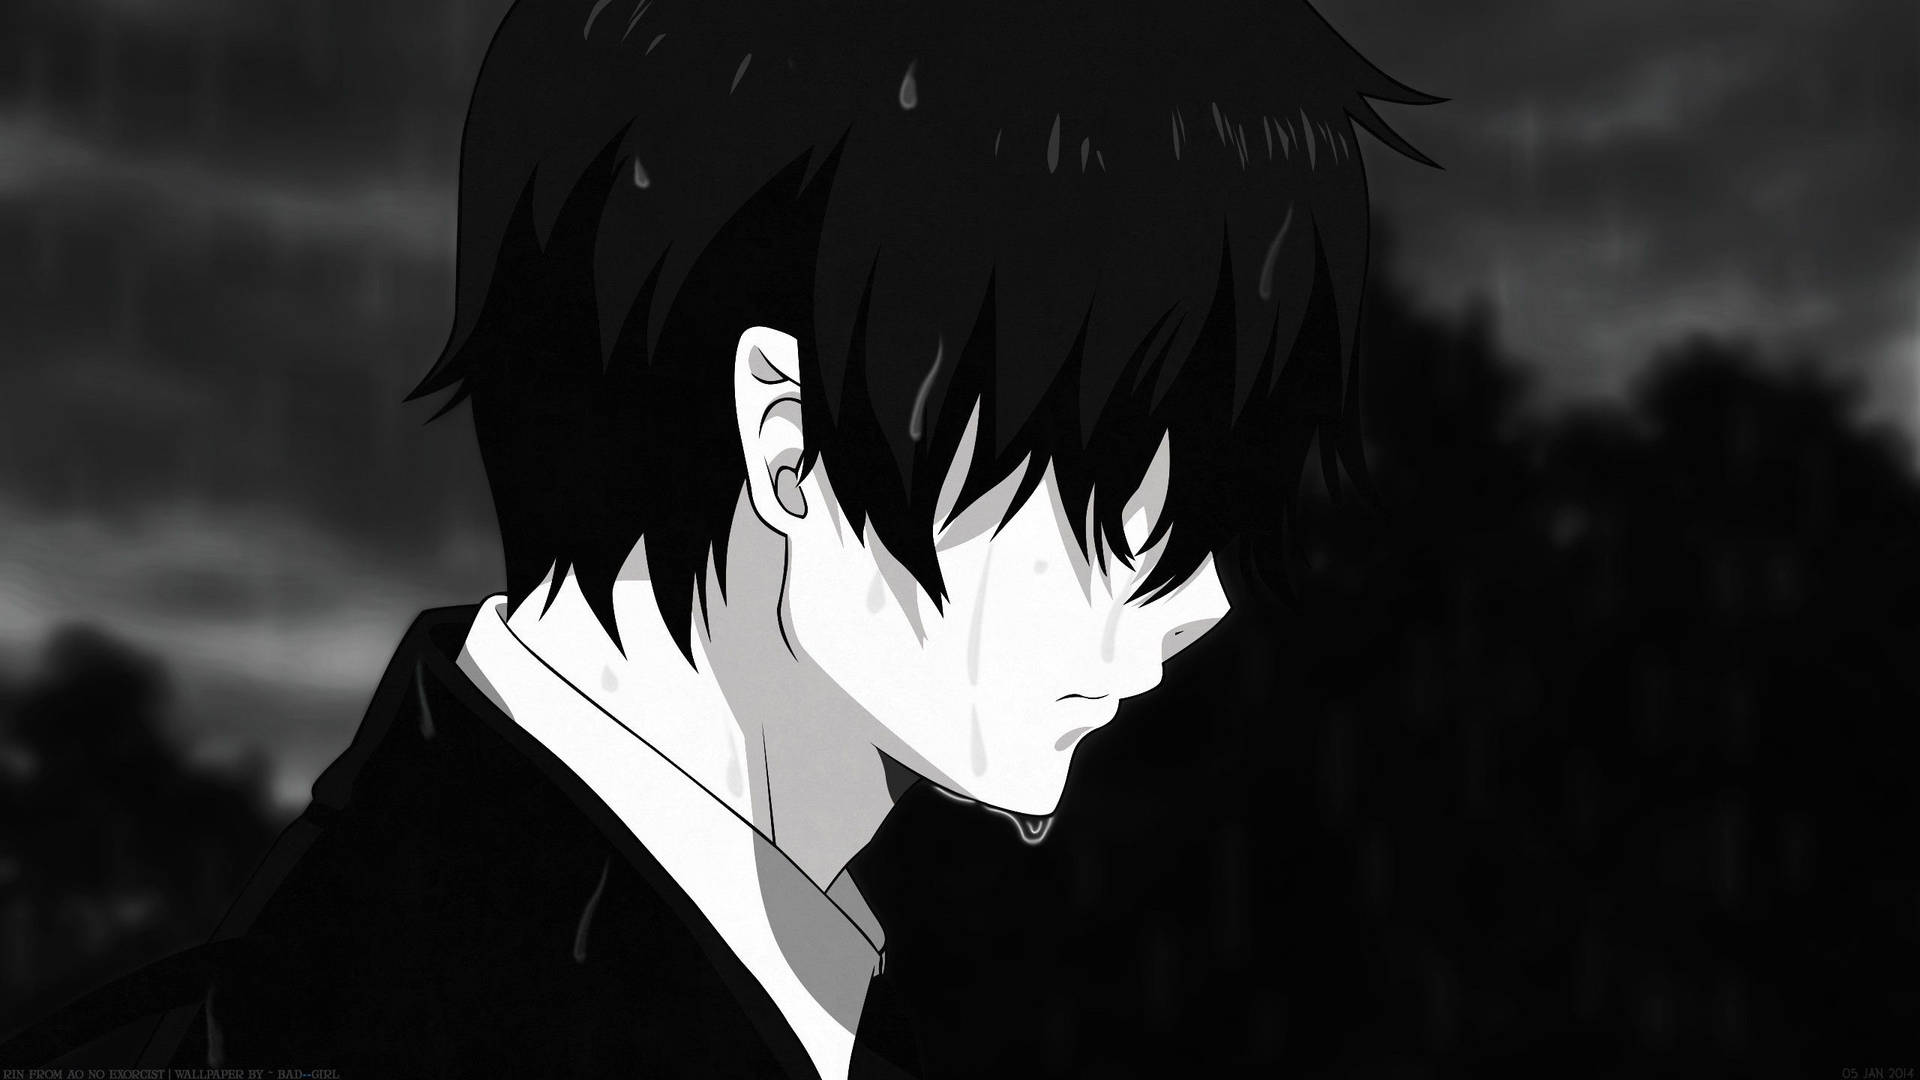 Sad Anime Black And White Aesthetic Wallpaper